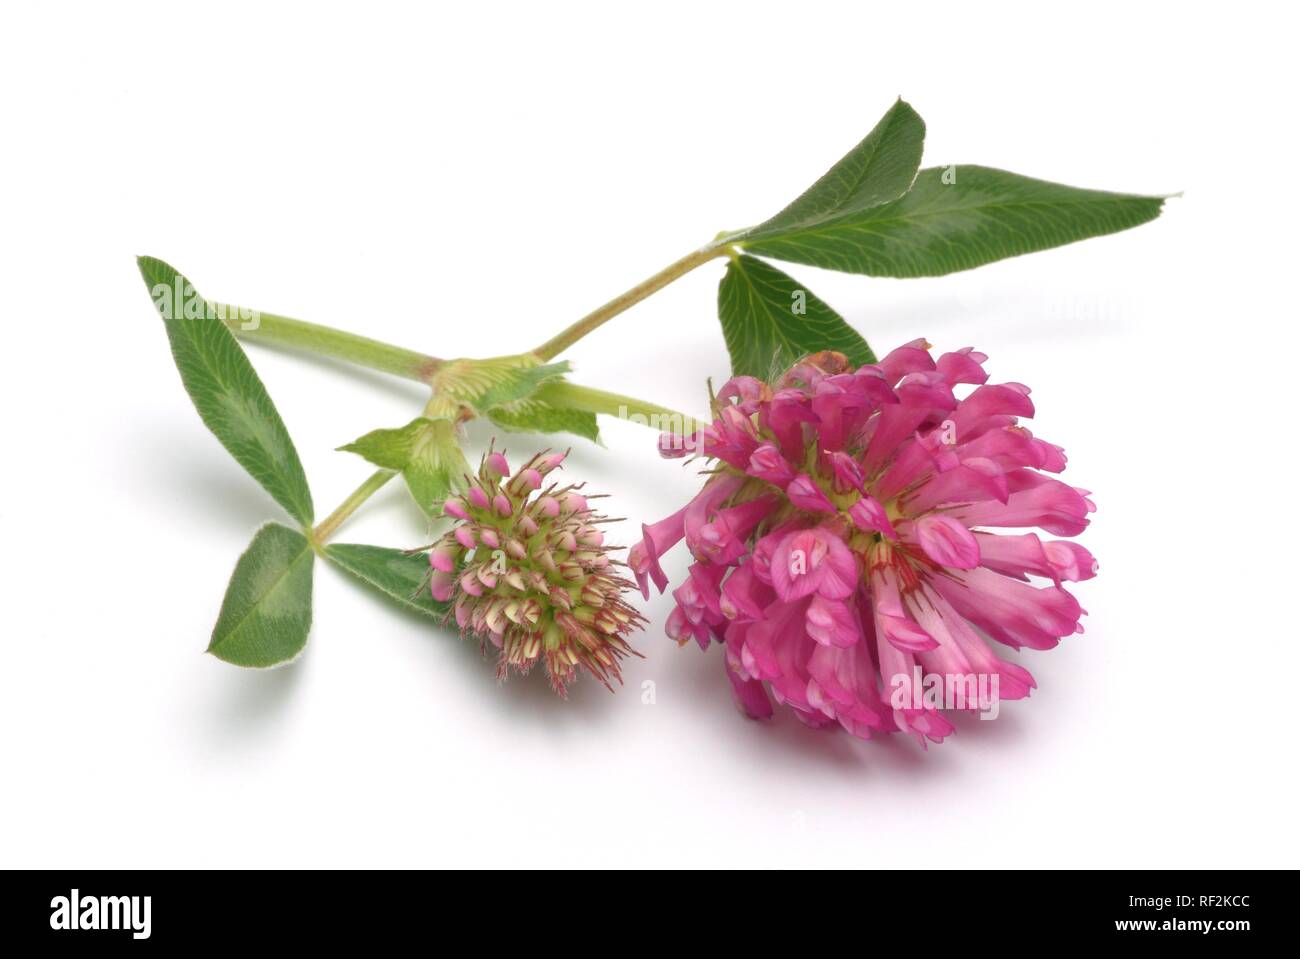 Red Clover (Trifolium pratense), medicinal plant Stock Photo